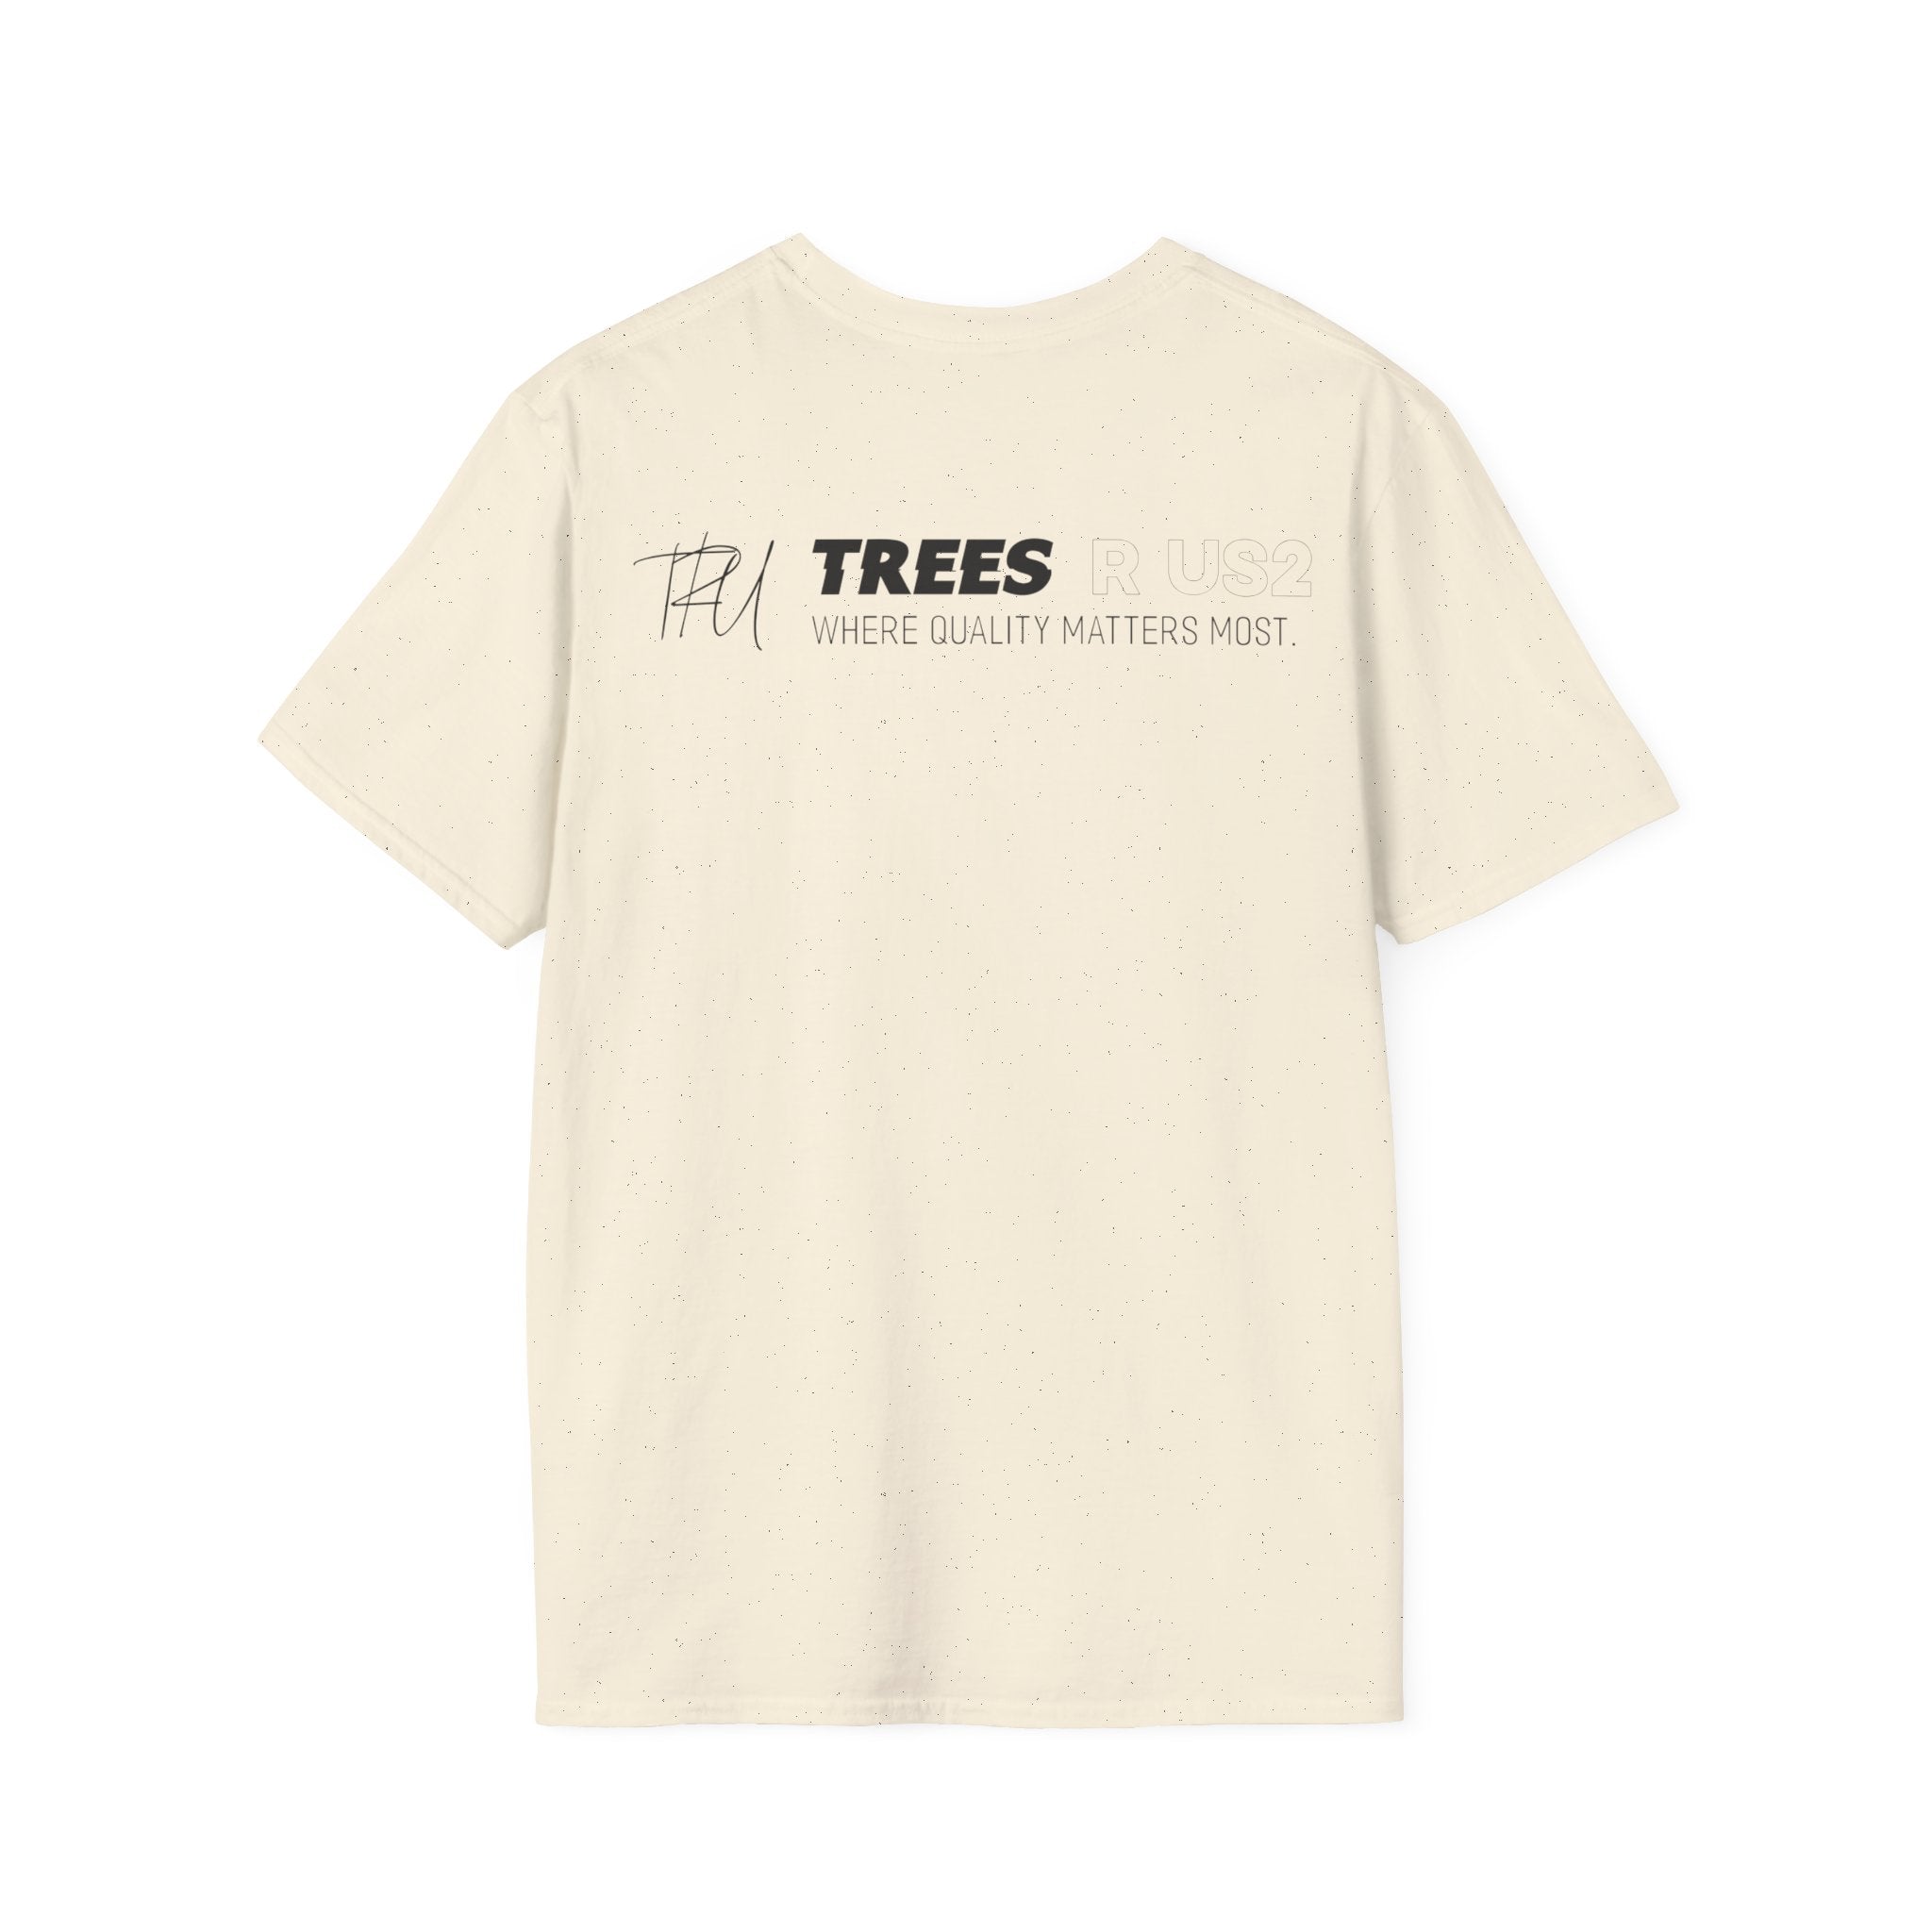 Lying Joe Tee - TreesRus2 Clothing